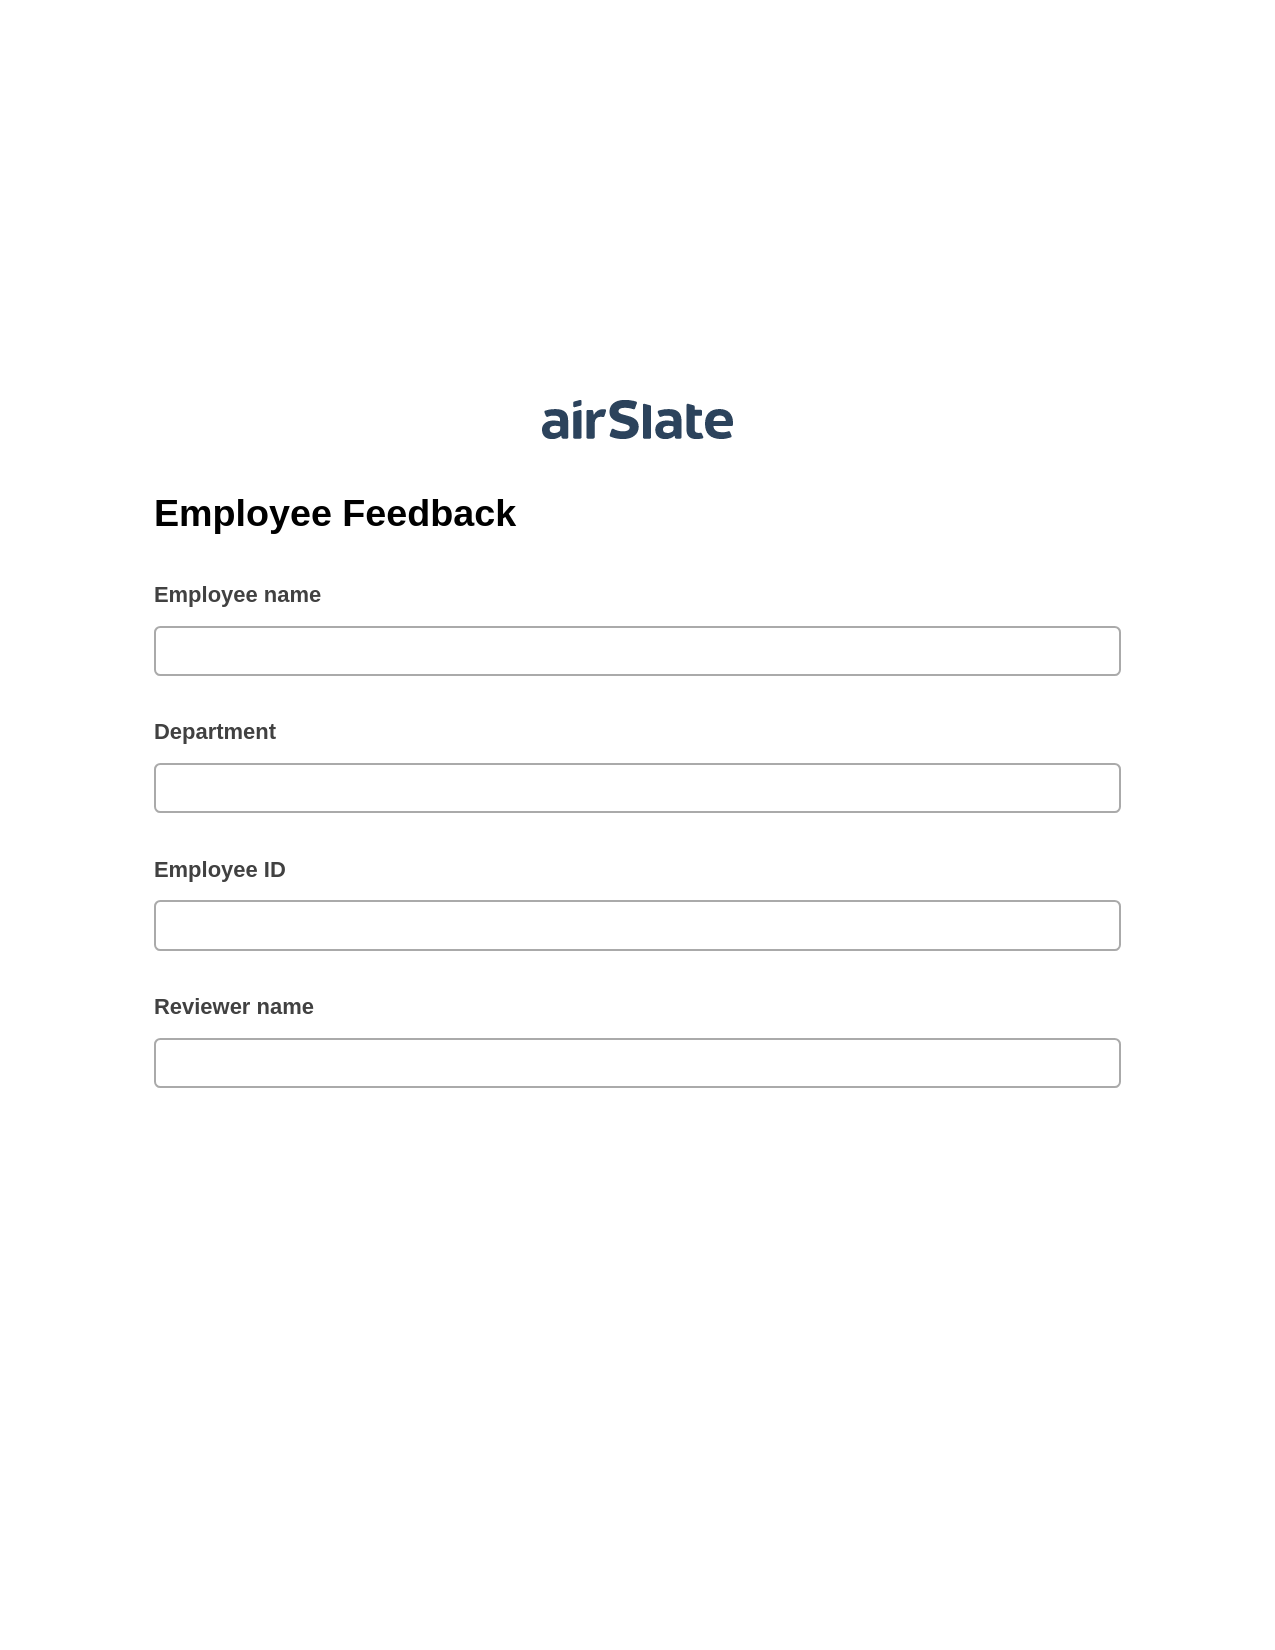 Employee Feedback Pre-fill from Google Sheet Dropdown Options Bot, Send a Slate to Salesforce Contact Bot, Dropbox Bot